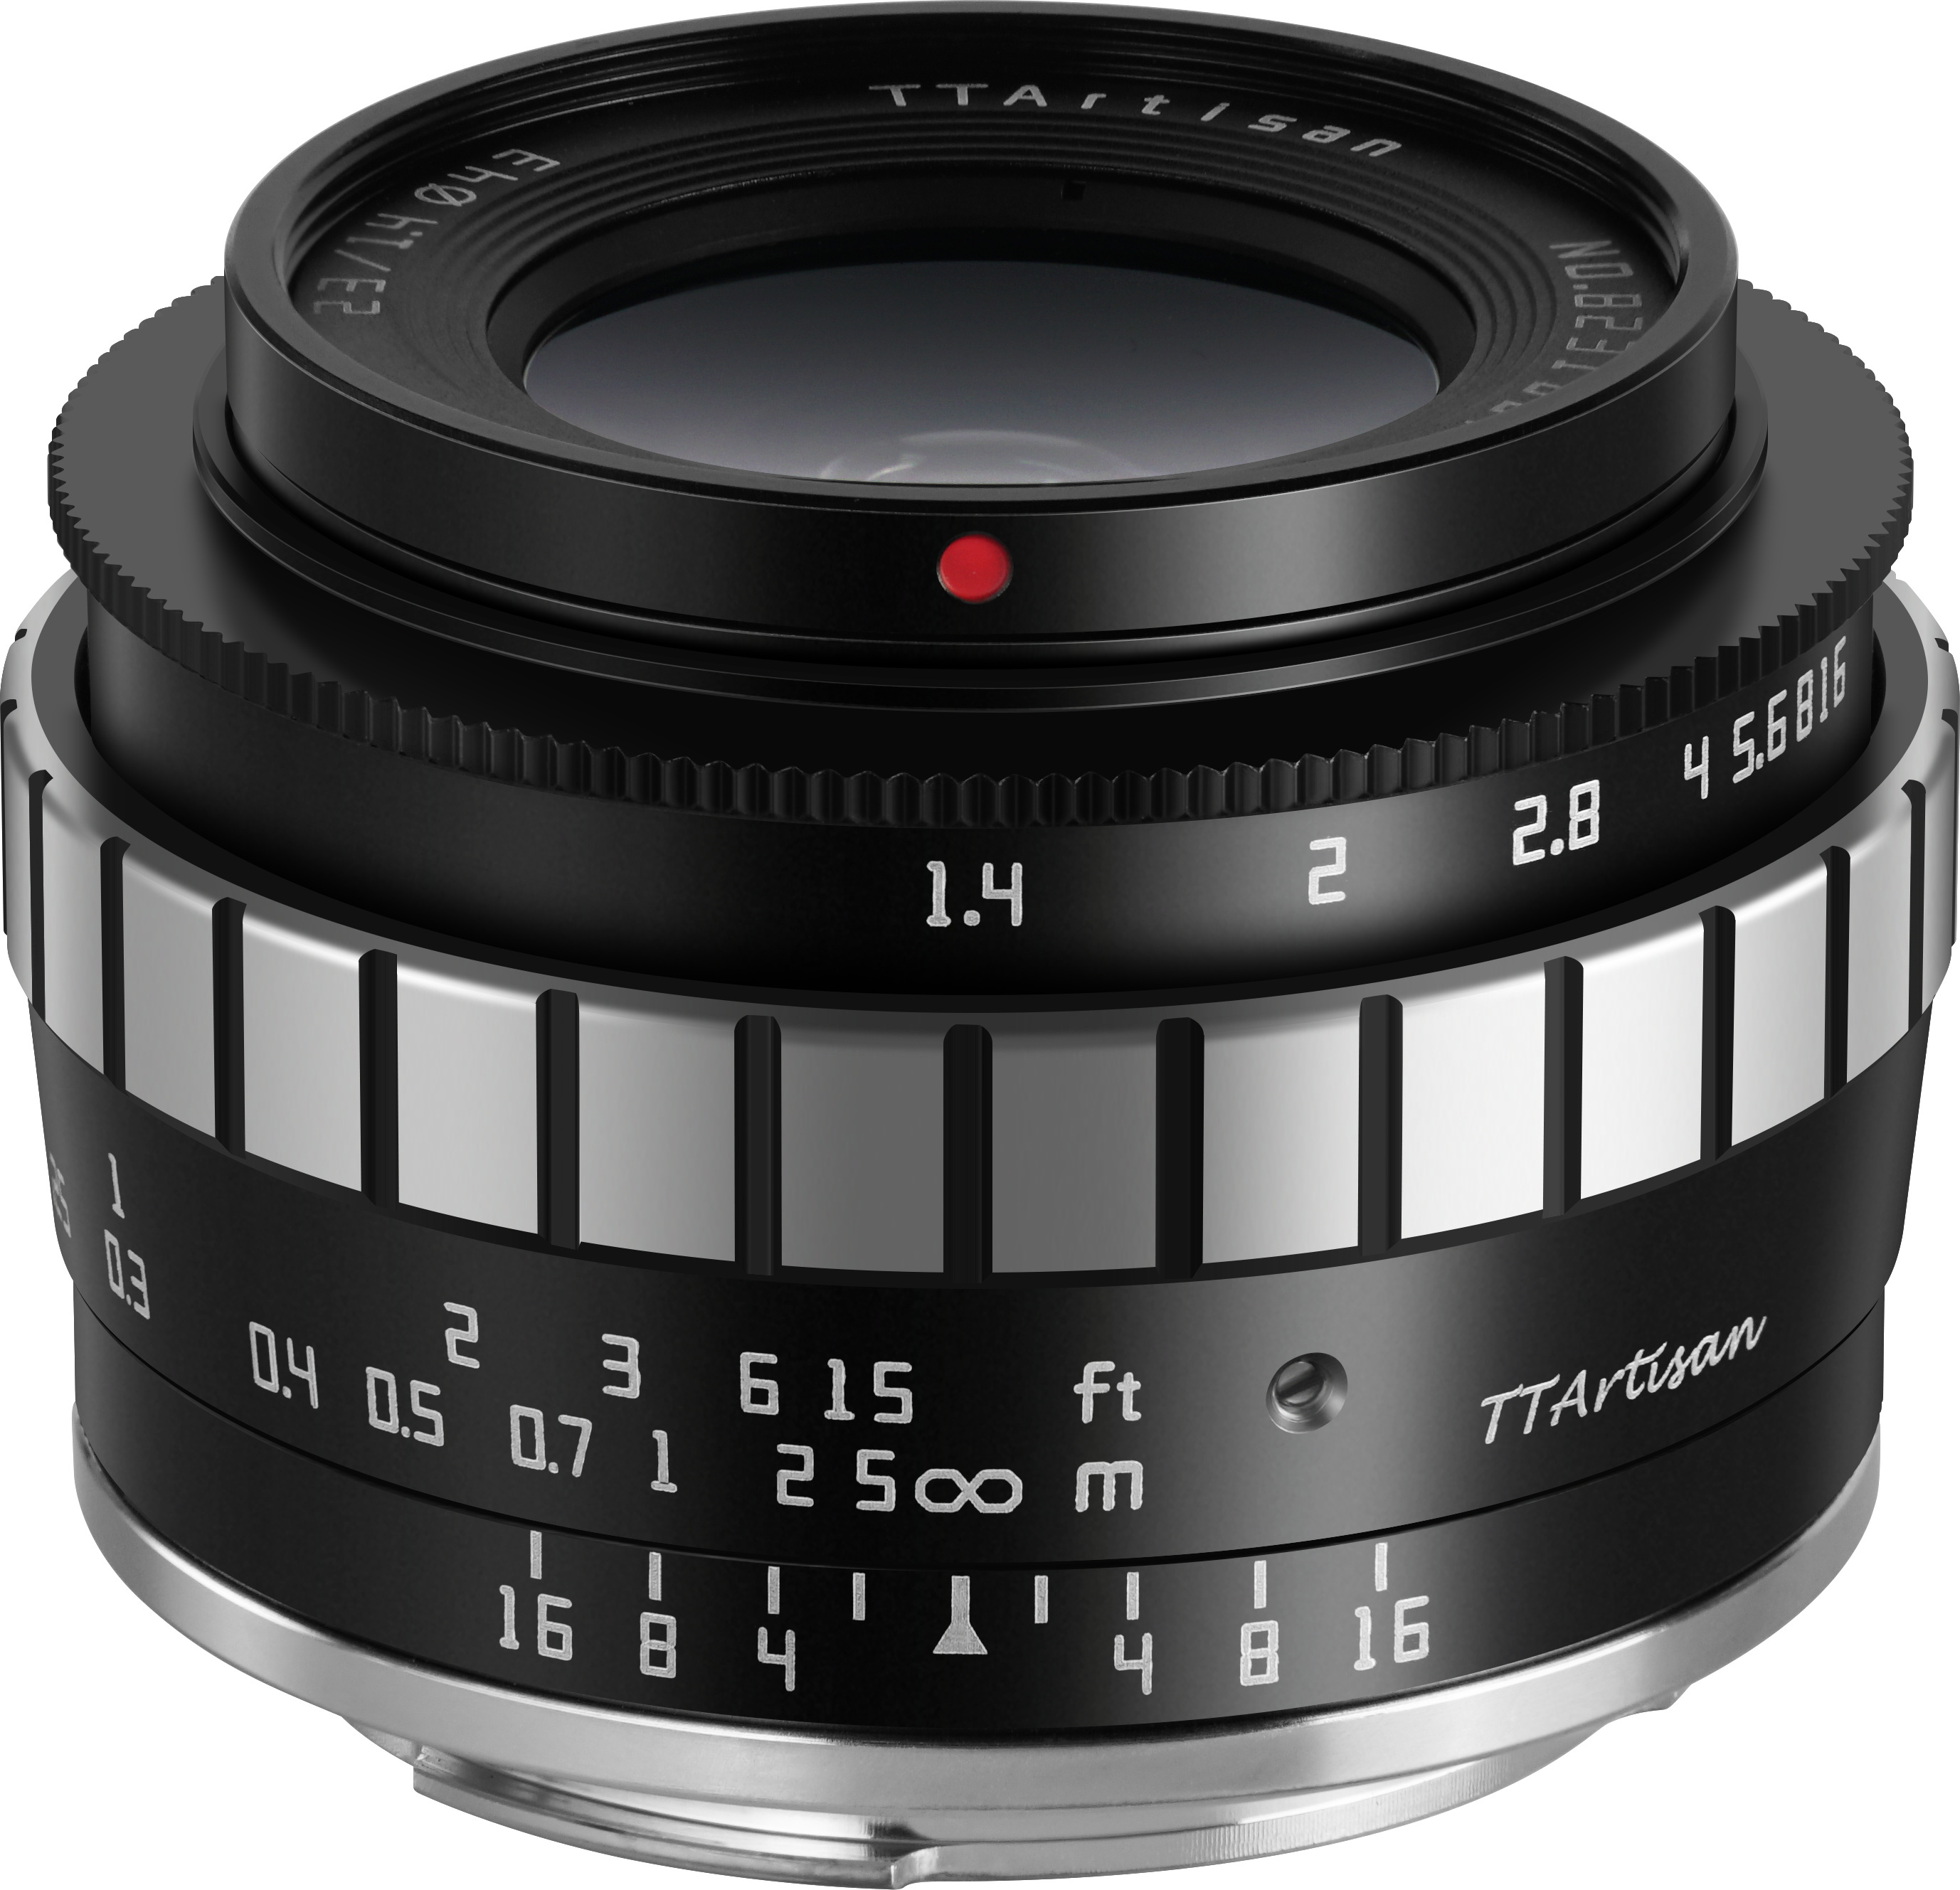 TTArtisan 23mm f/1.4 APS-C Lens for Micro Four Thirds (Black & Silver)